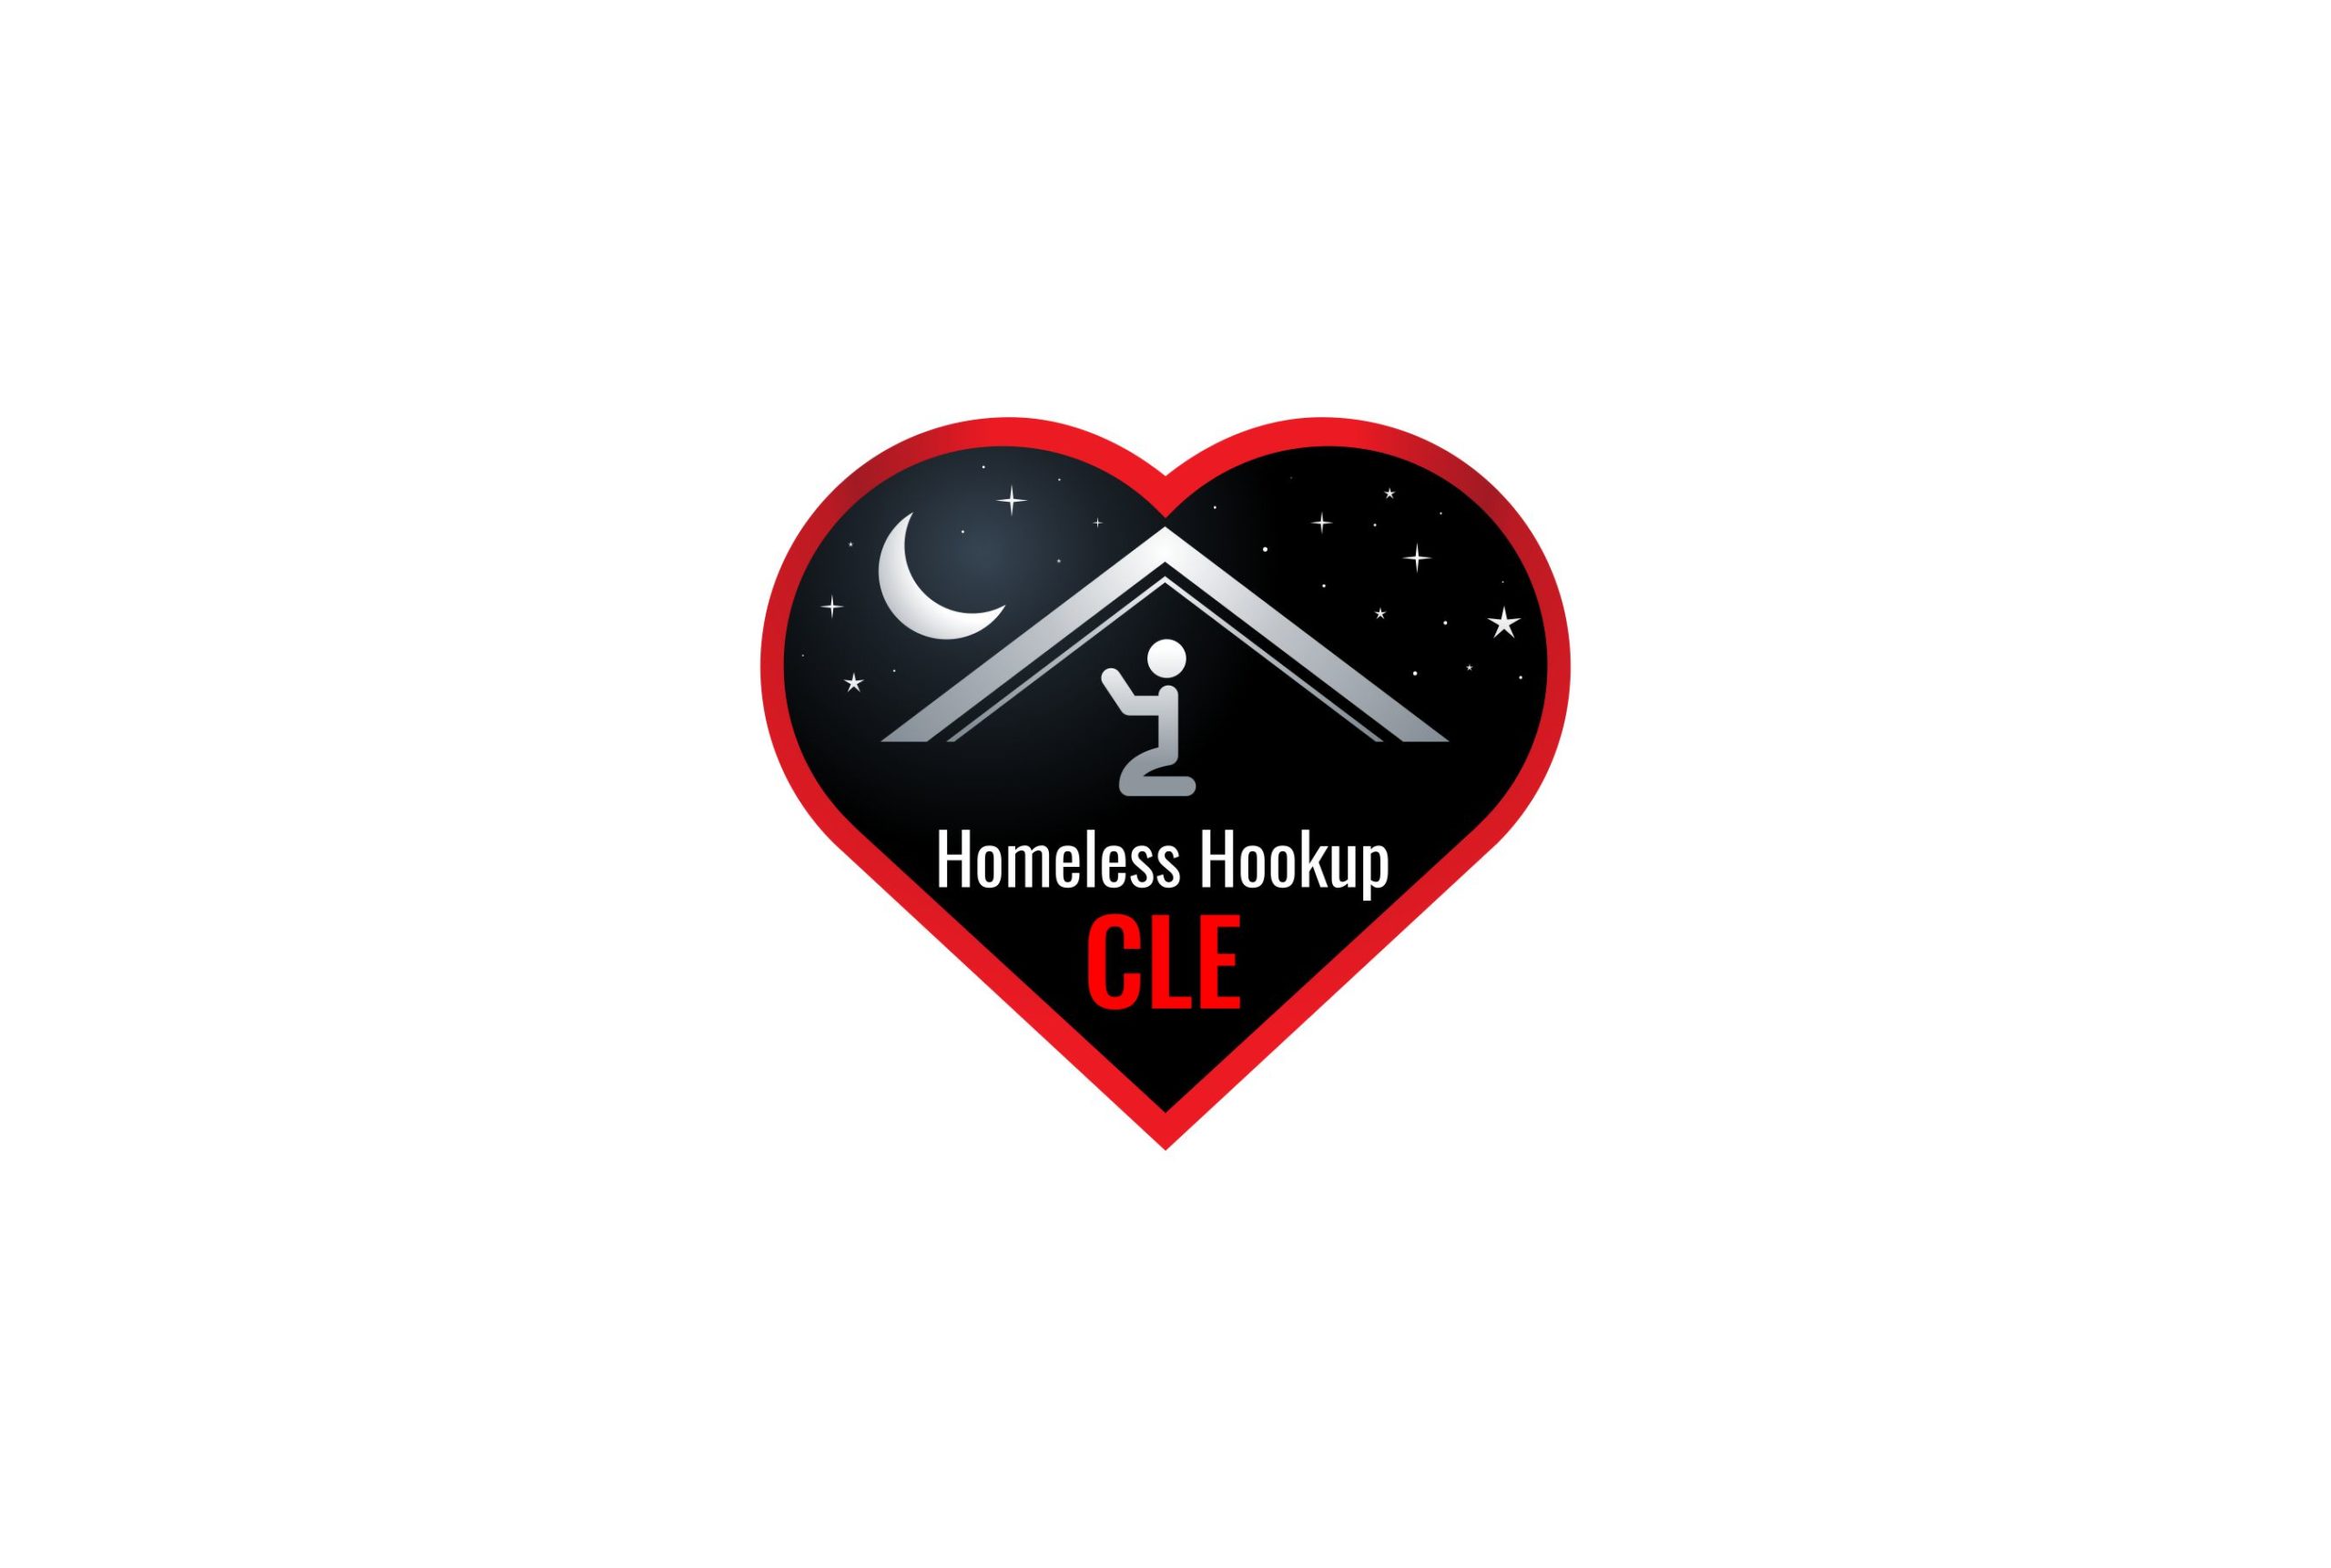 Homeless-Hookup-CLE-1